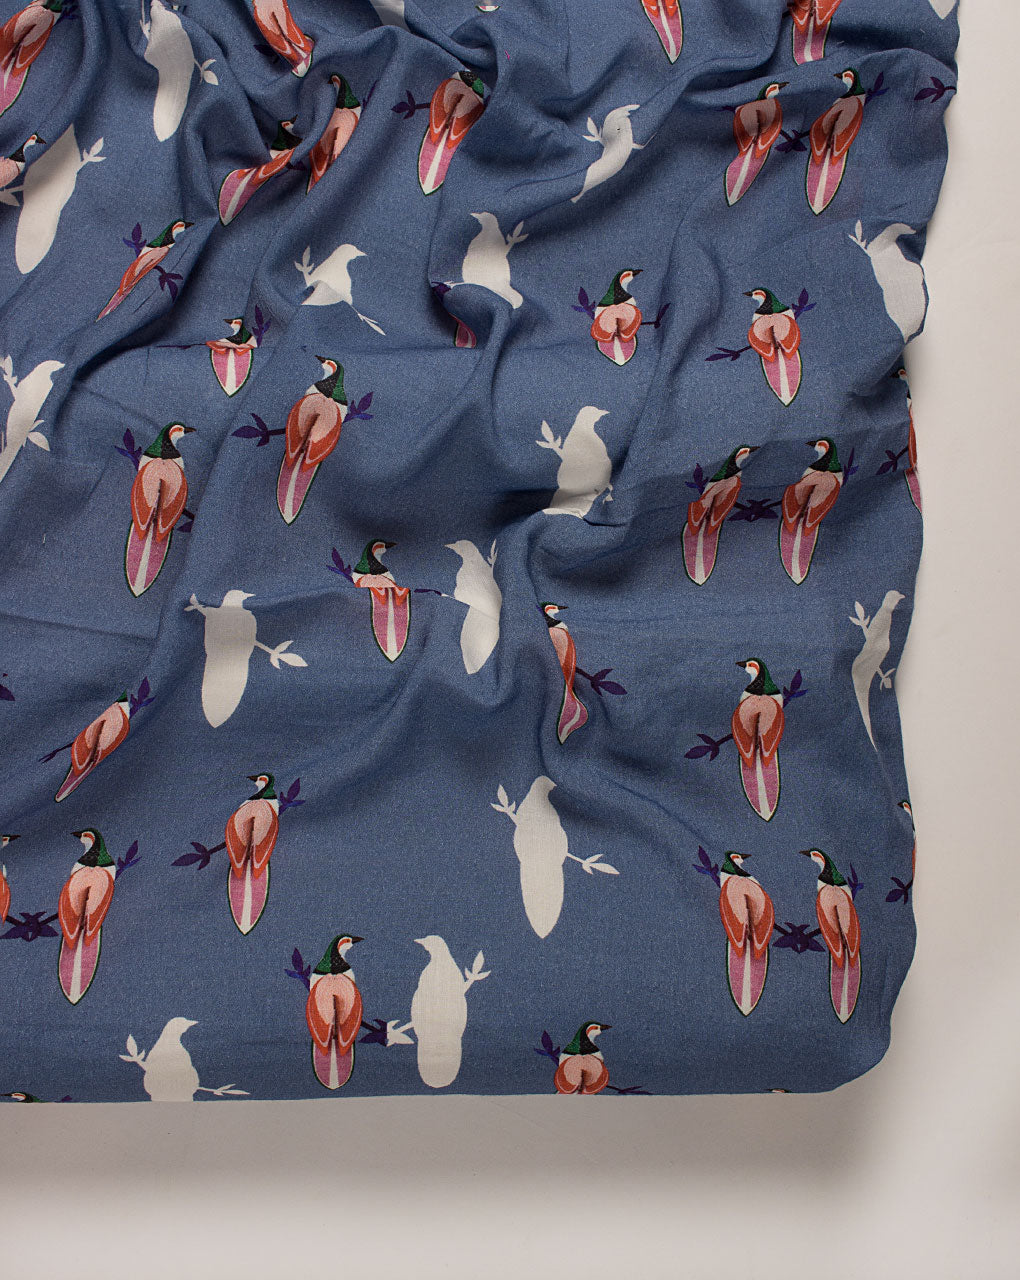 Missing Bird Exclusive Digital Print Rayon Modal Fabric